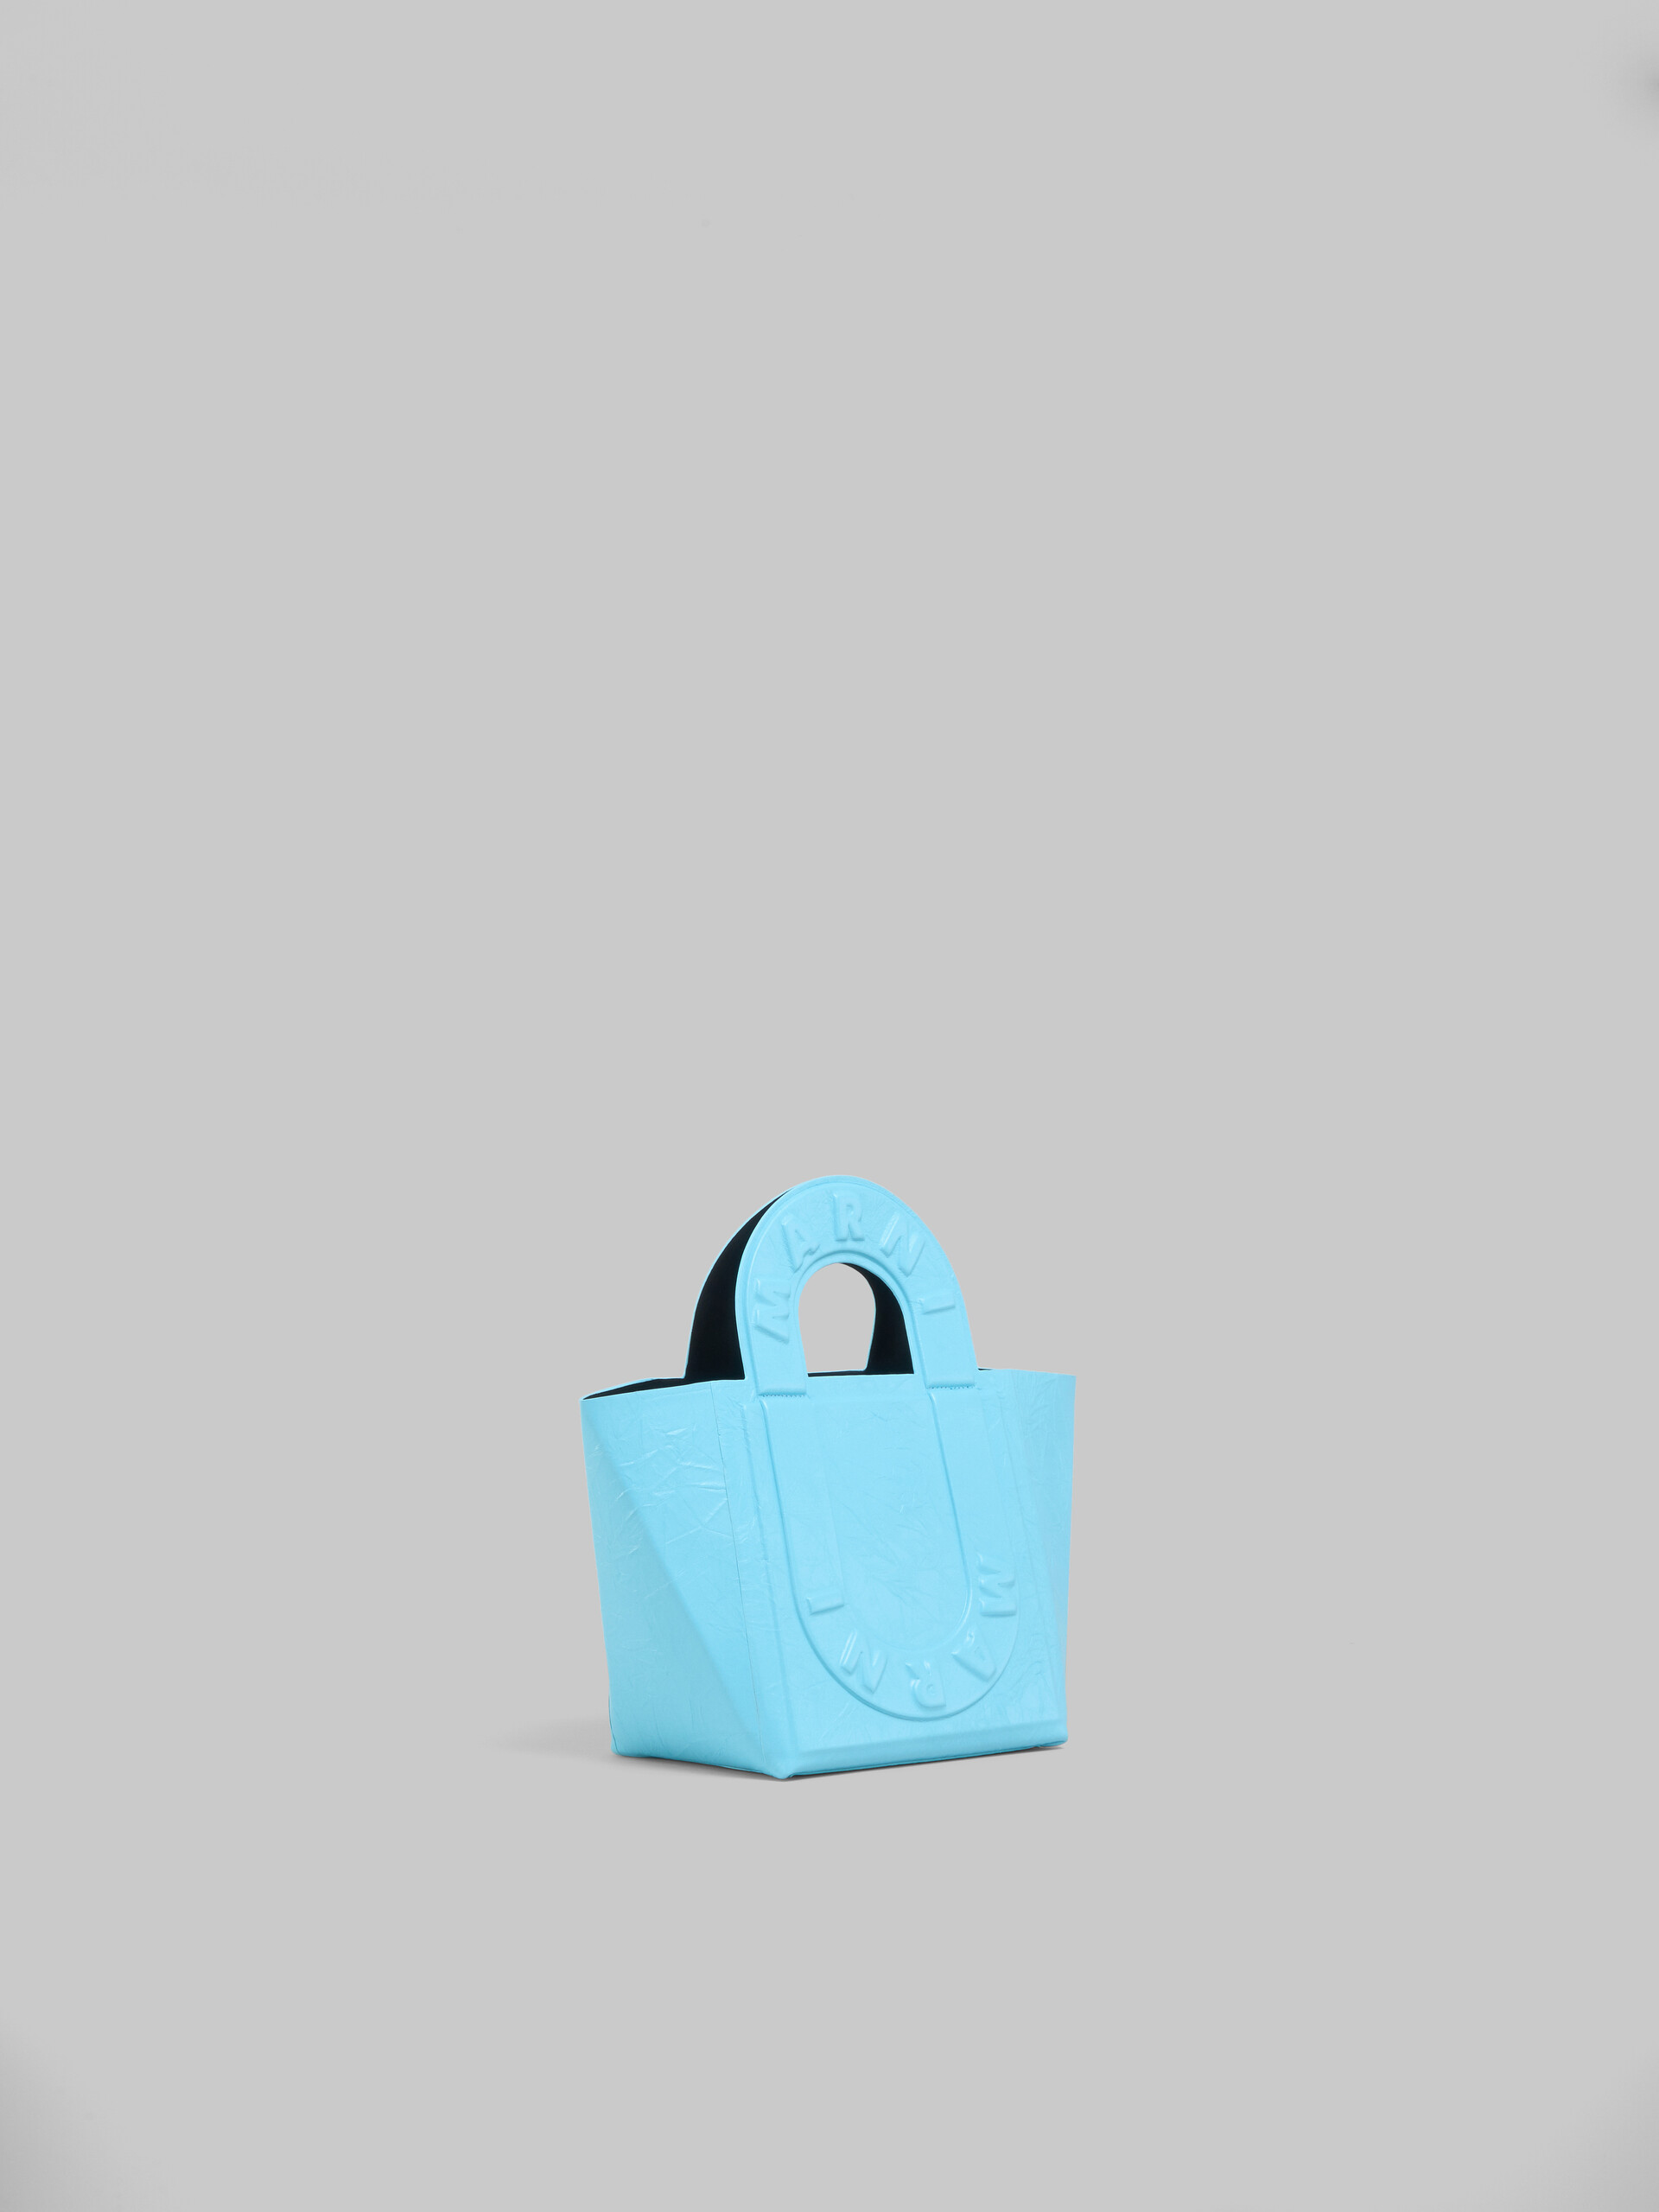 Sweedy Tote Bag piccola in pelle turchese - Borse shopping - Image 5